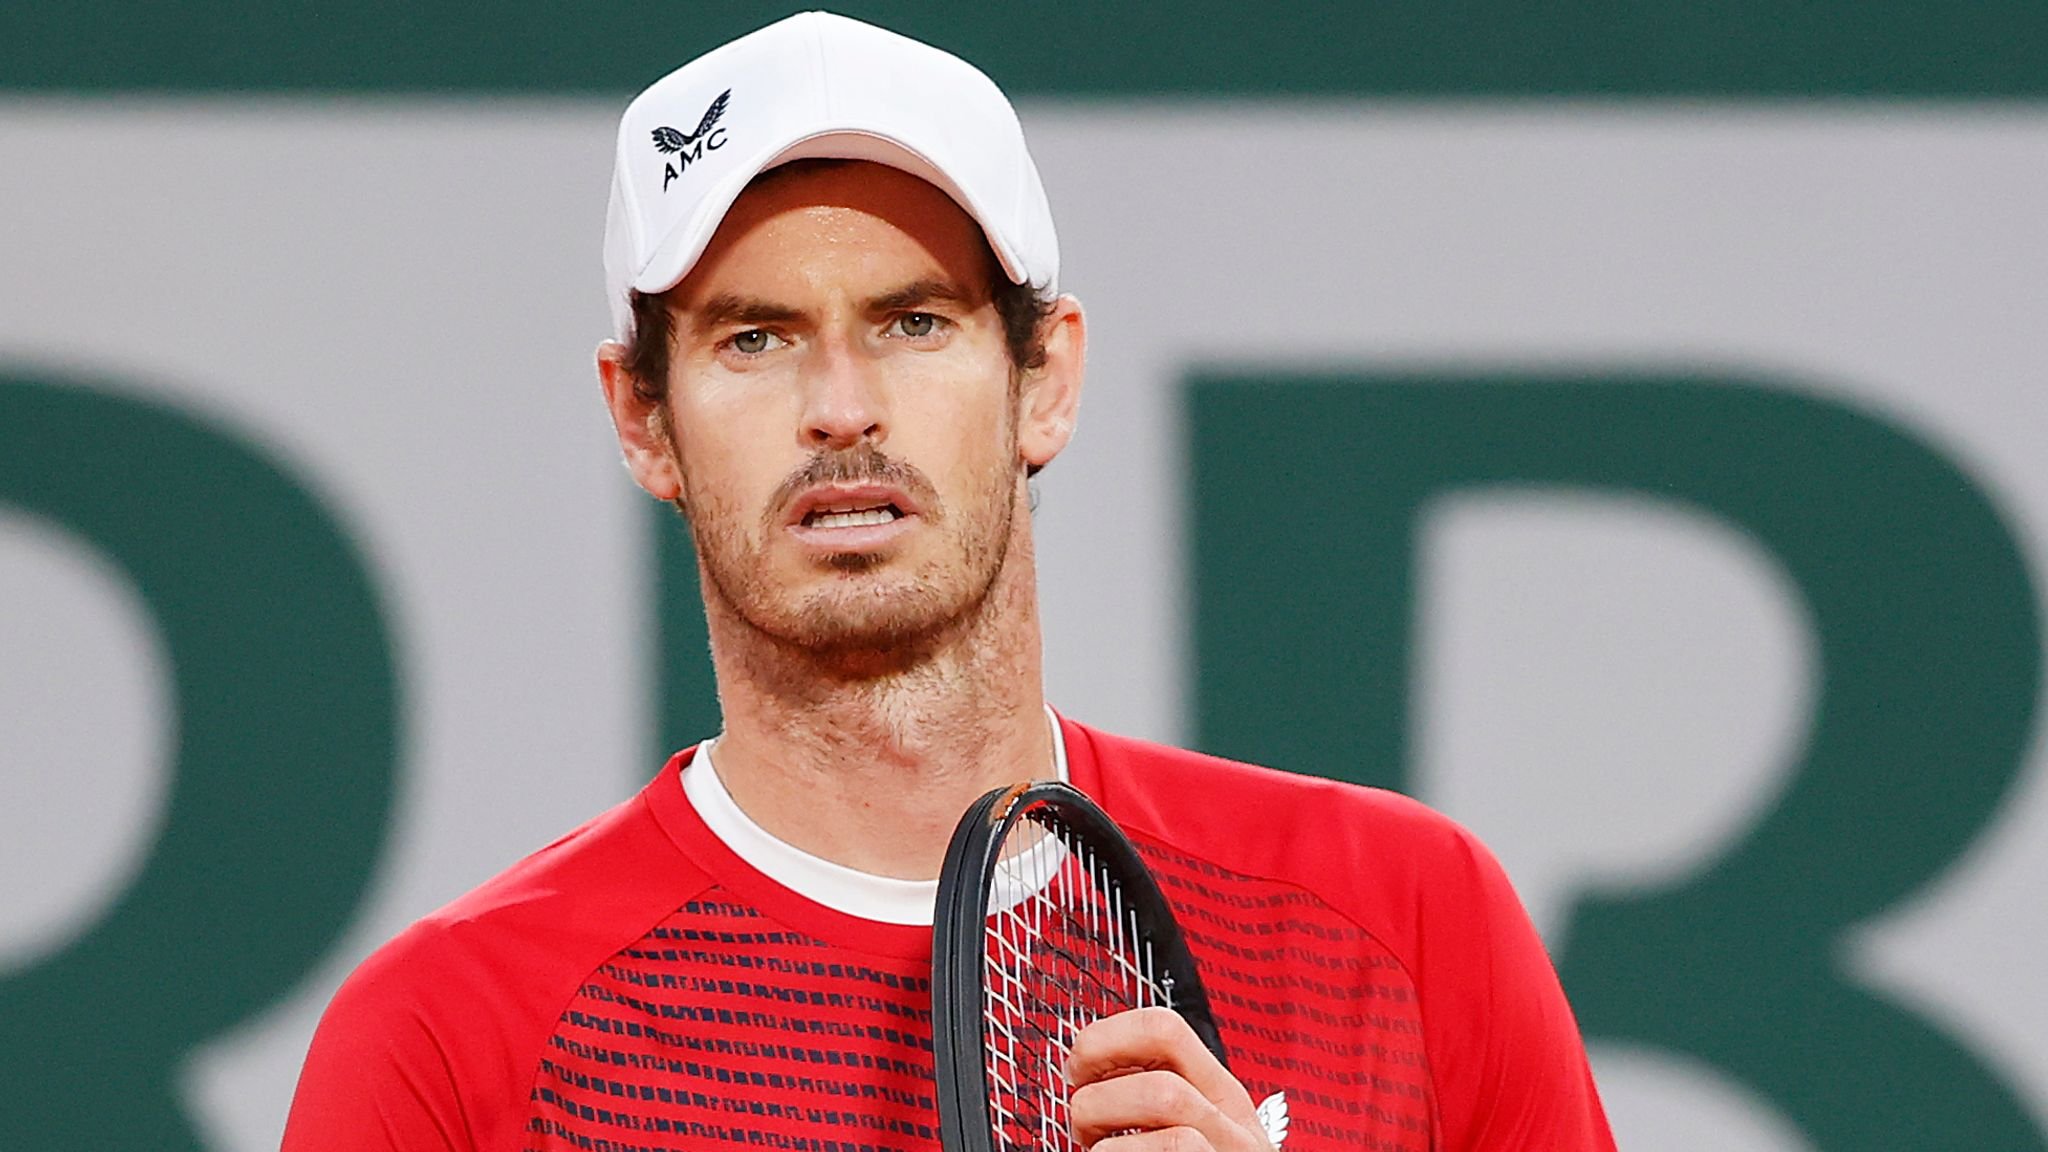  Andy Murray, eliminat de Fernando Verdasco în primul tur la turneul de la Koln